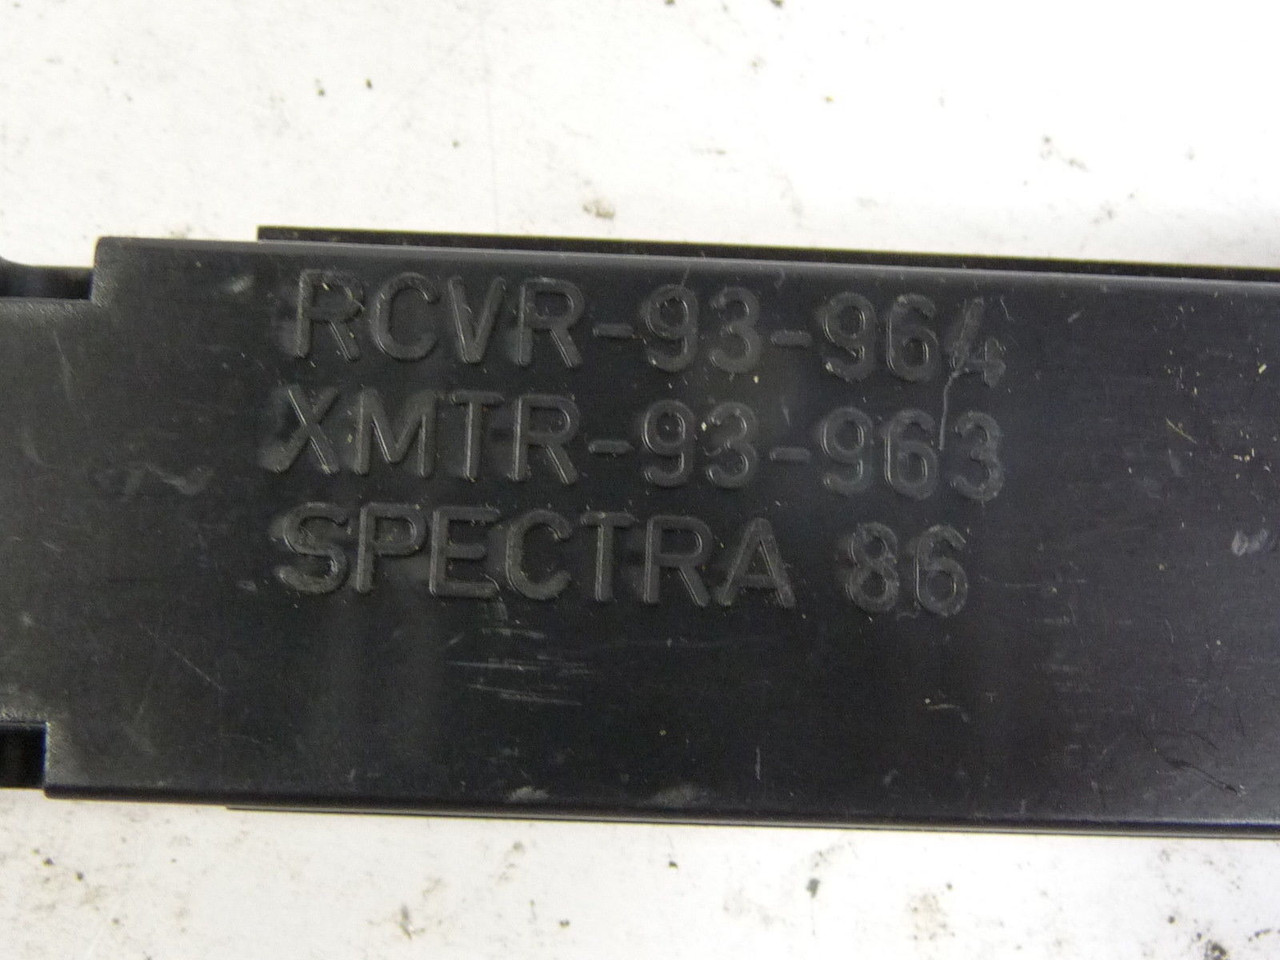 Spectra 86 RCVR-93-964 Receiver Module USED